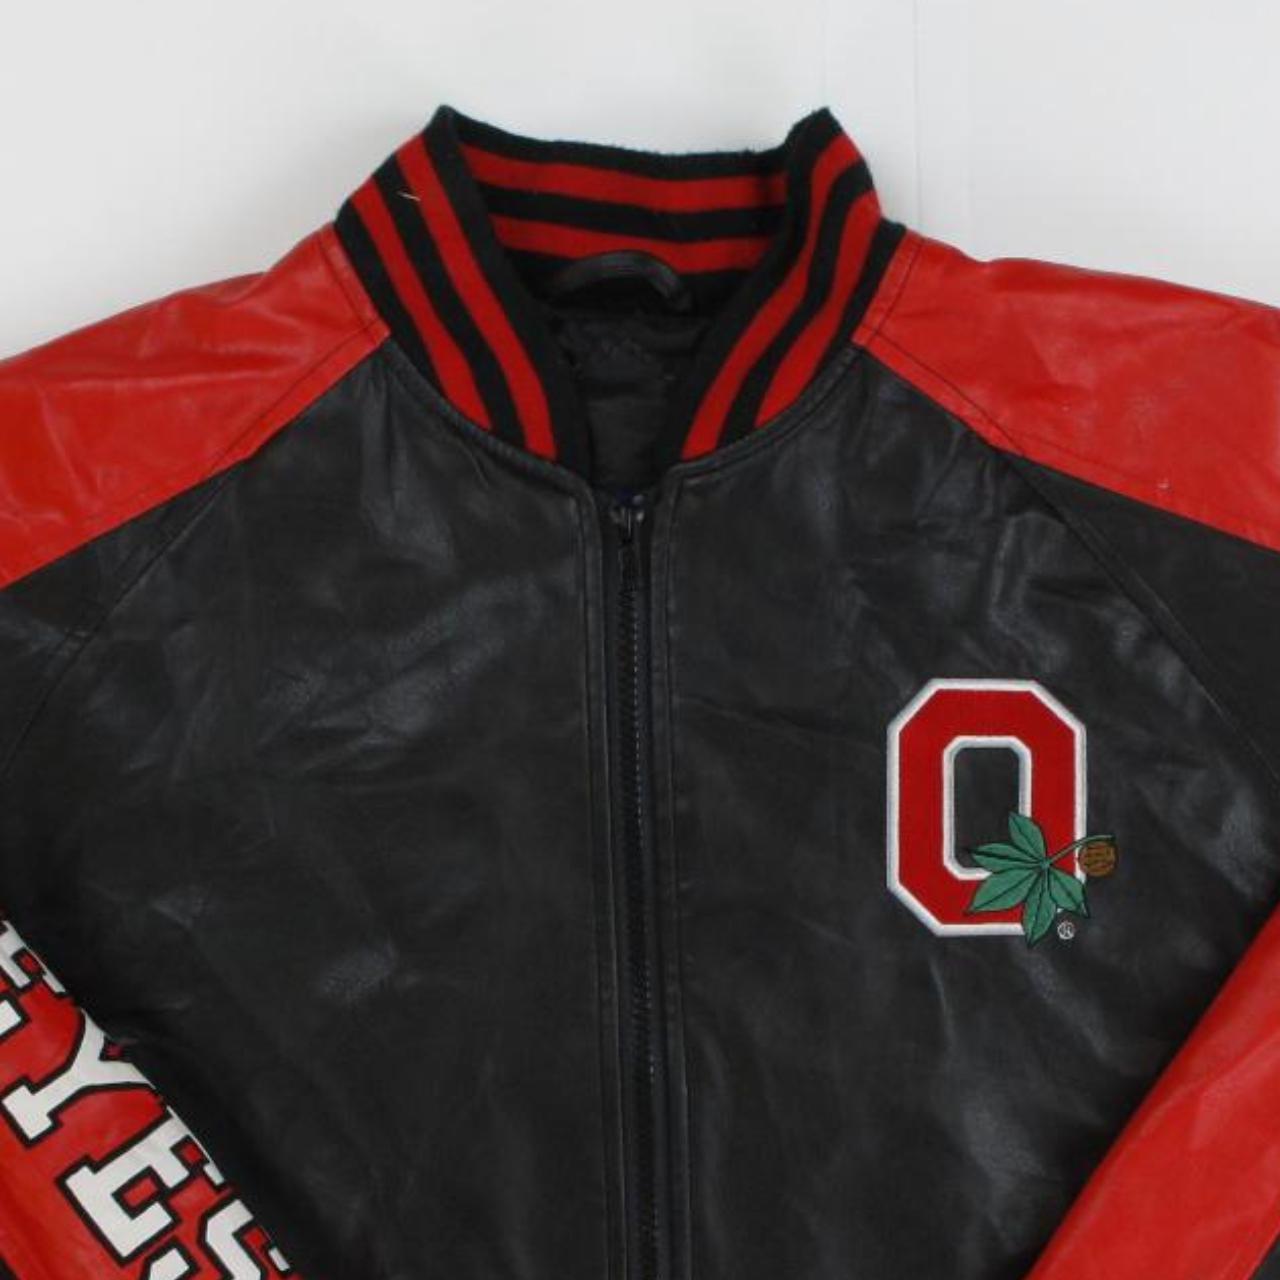 Product Image 1 - Varsity Jacket.

Vintage Buckleys College Jacket.